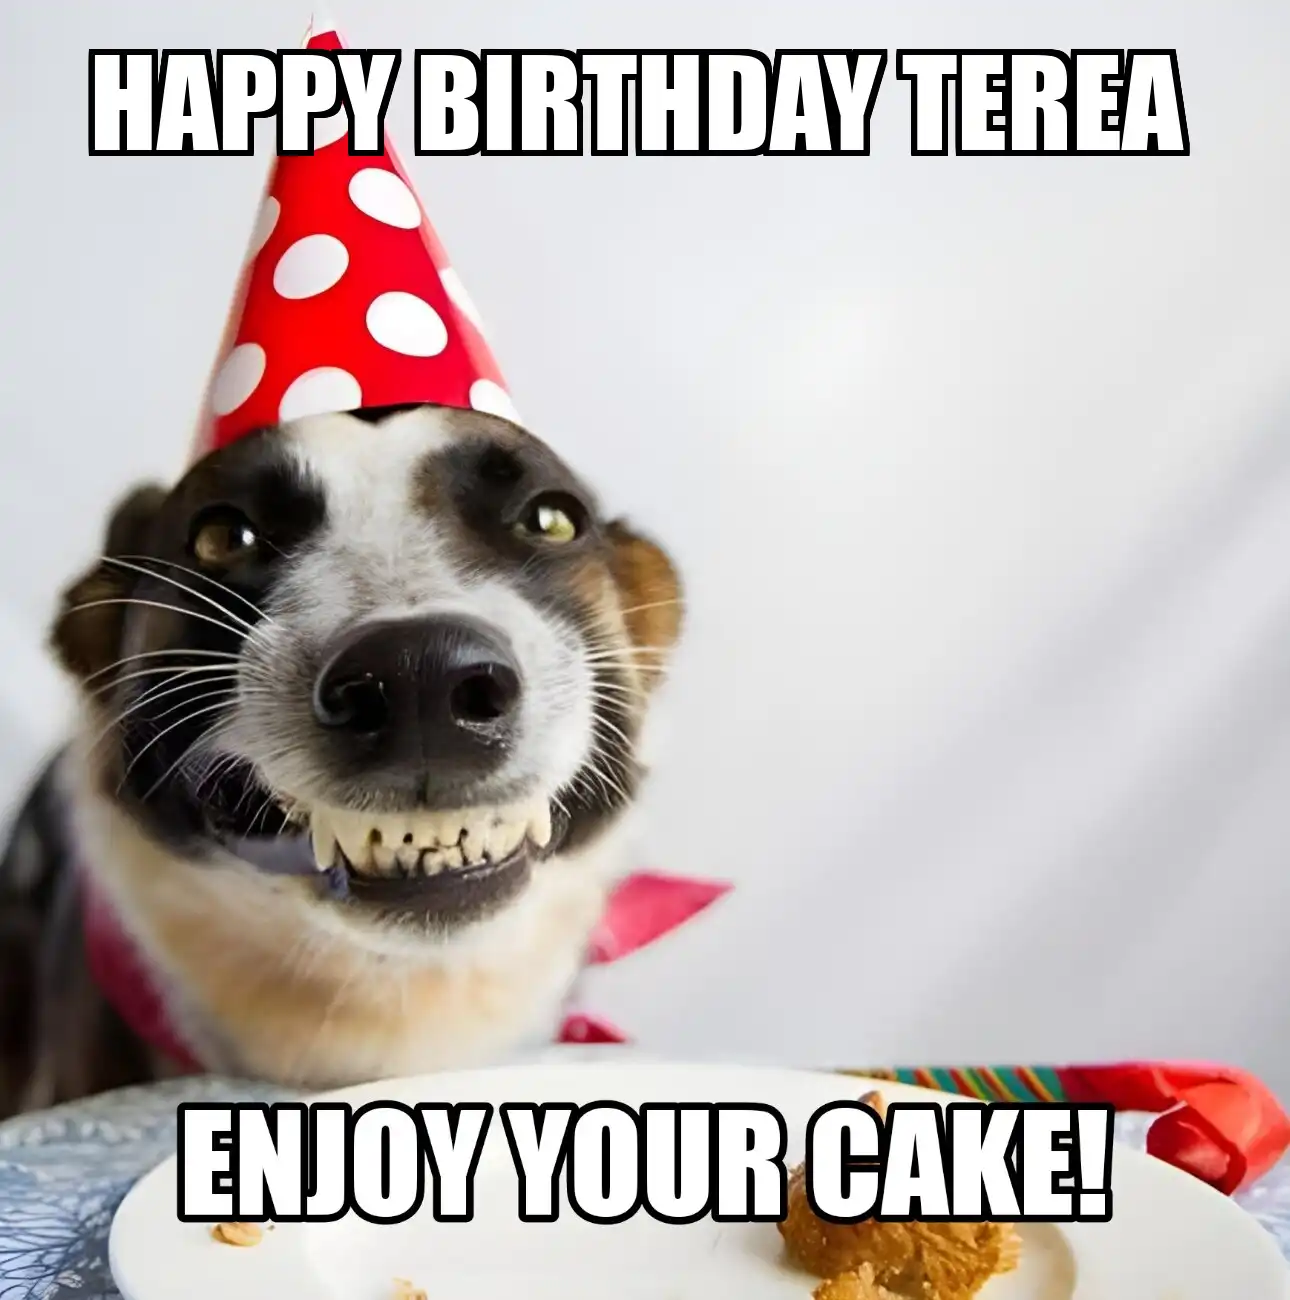 Happy Birthday Terea Enjoy Your Cake Dog Meme